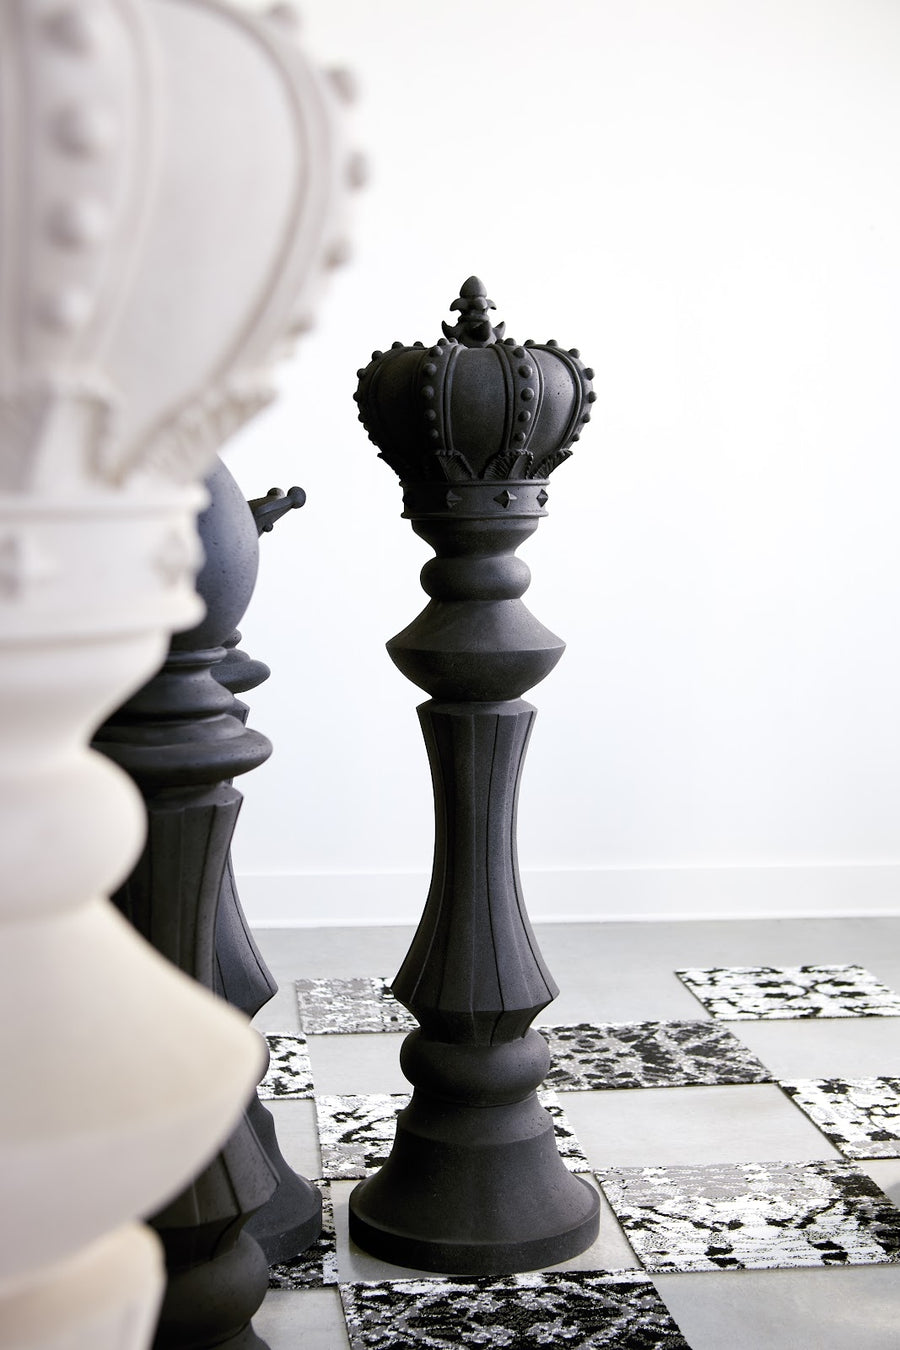 King Chess Sculpture, Cast Stone Black